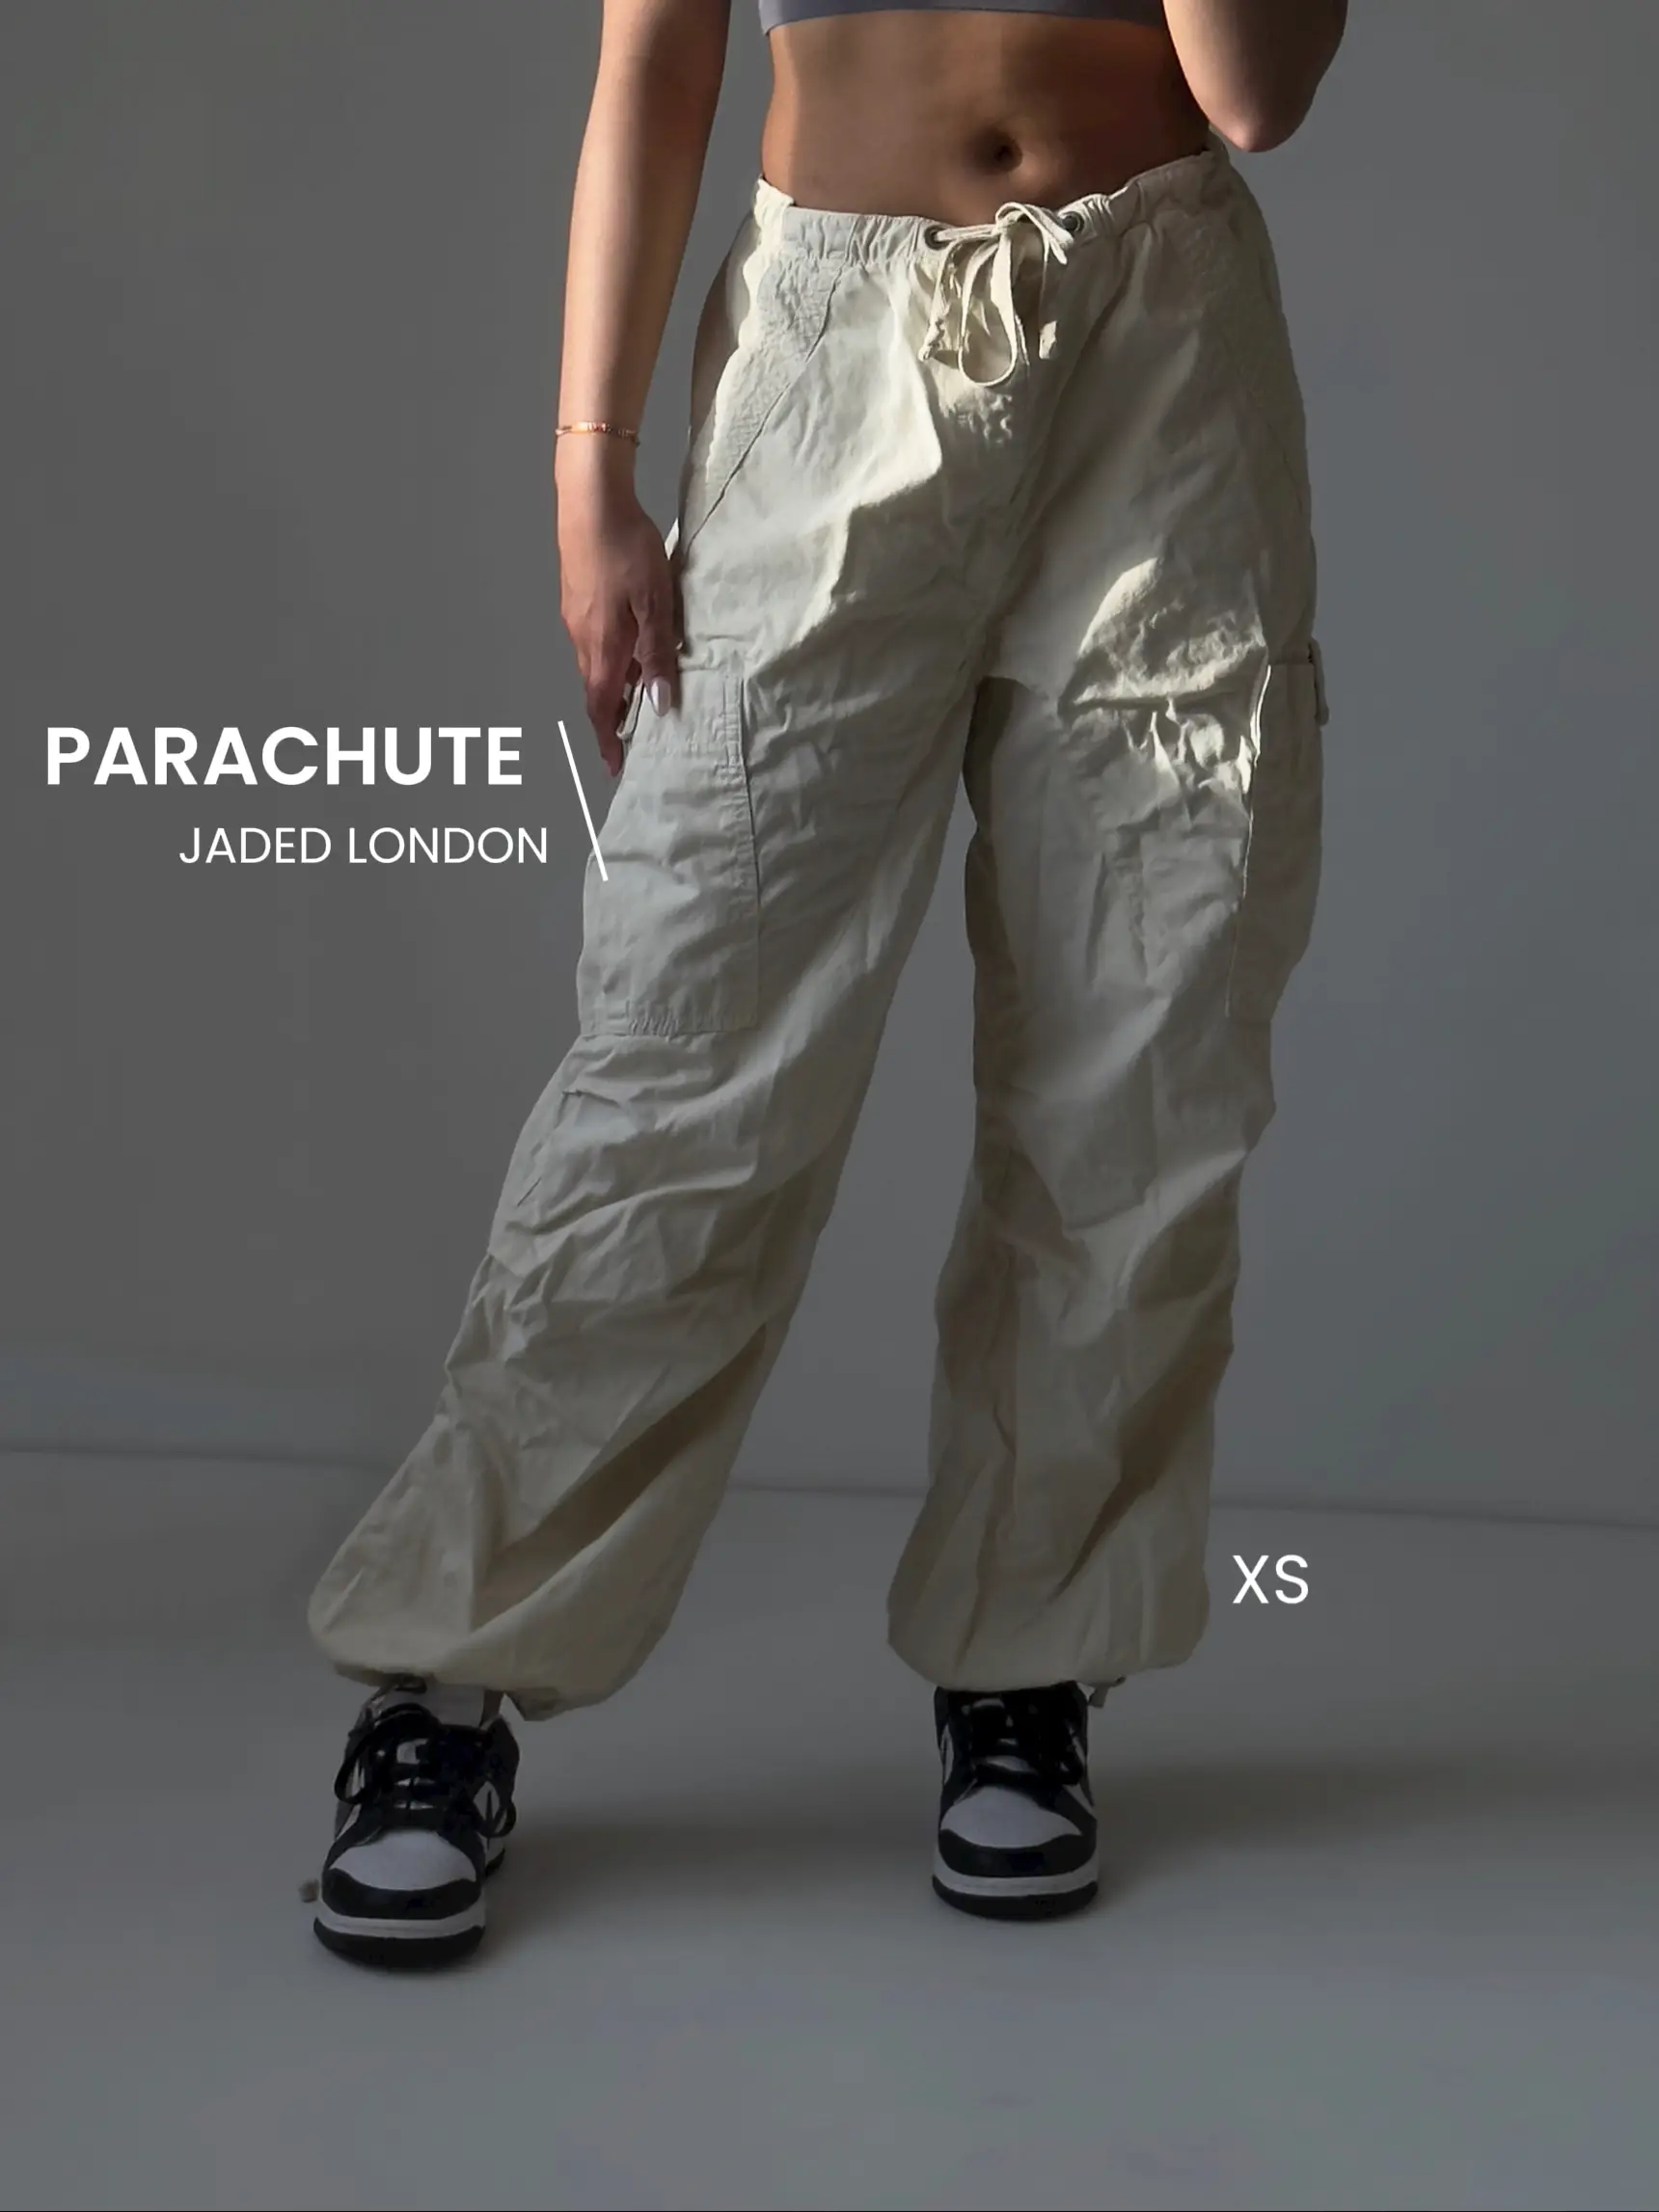 Zara Low/mid rise white cargo pants ✨ —— has some - Depop